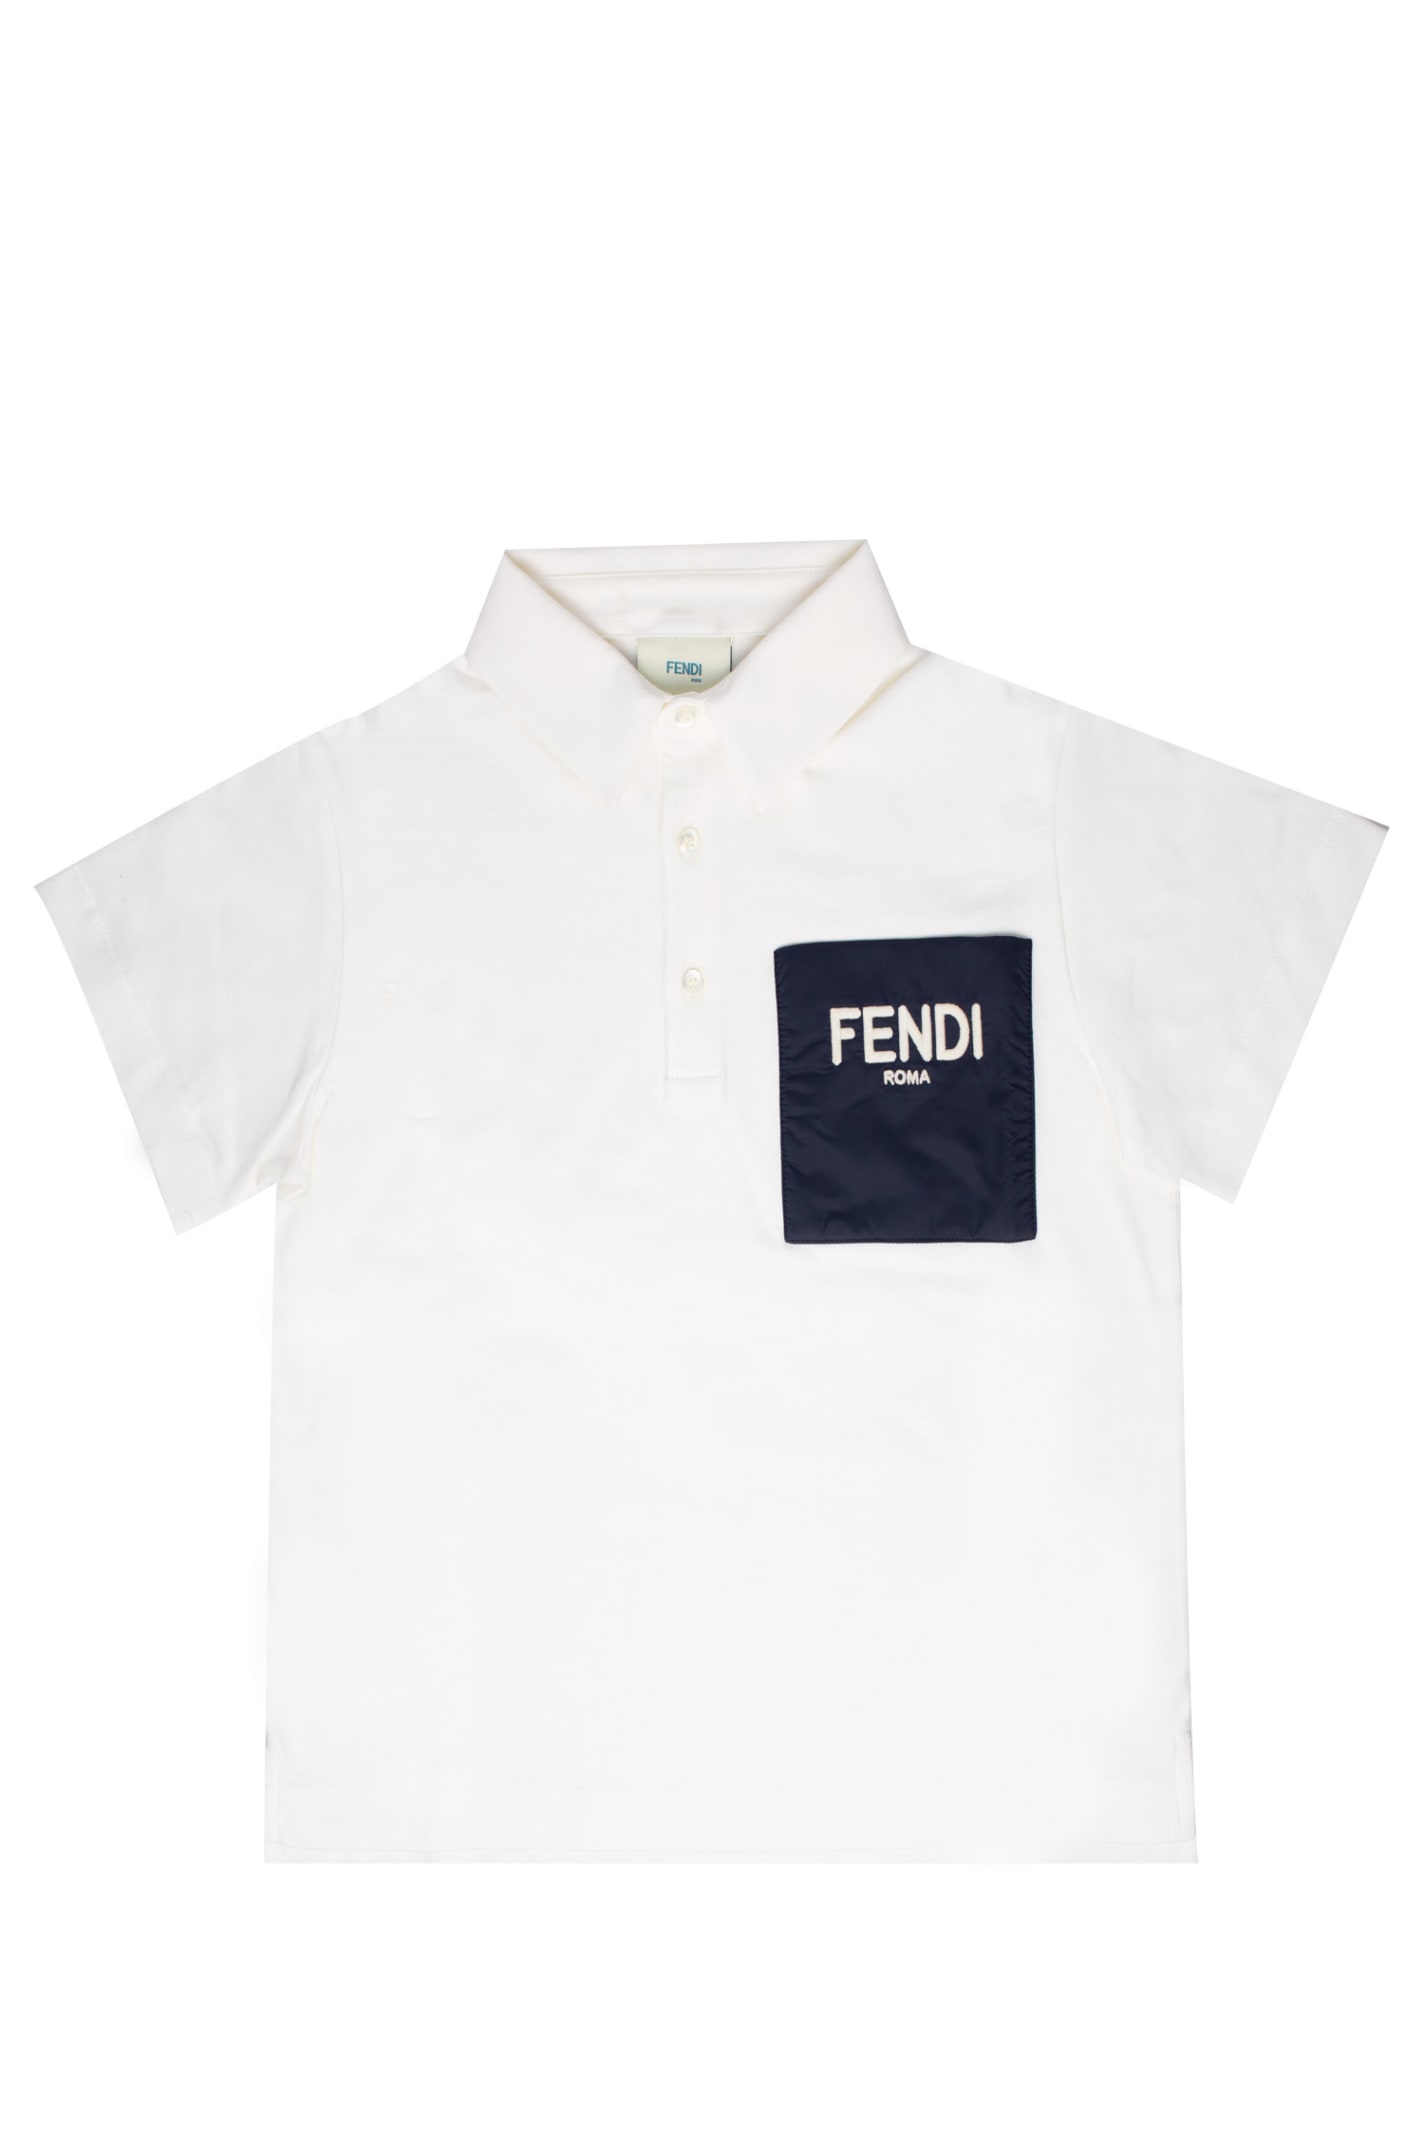 Fendi Cotton Jersey Polo Shirt